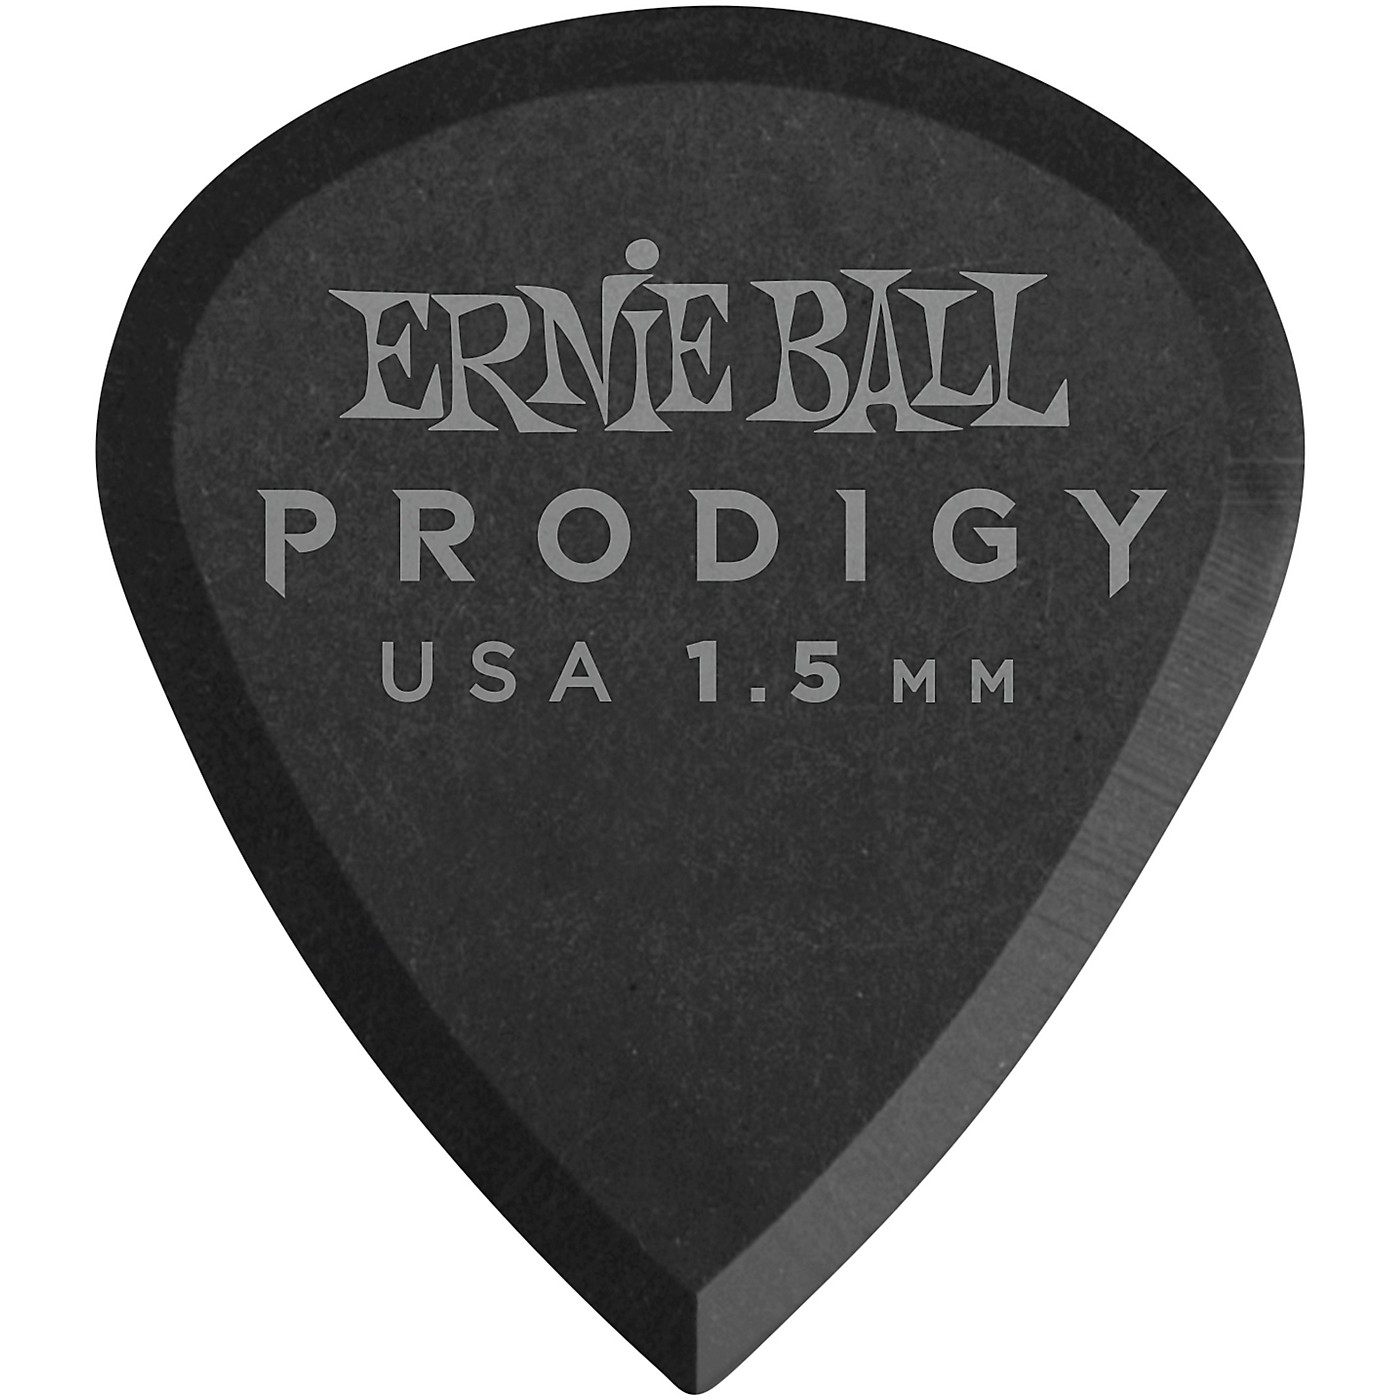 Ernie Ball Prodigy Picks Mini thumbnail